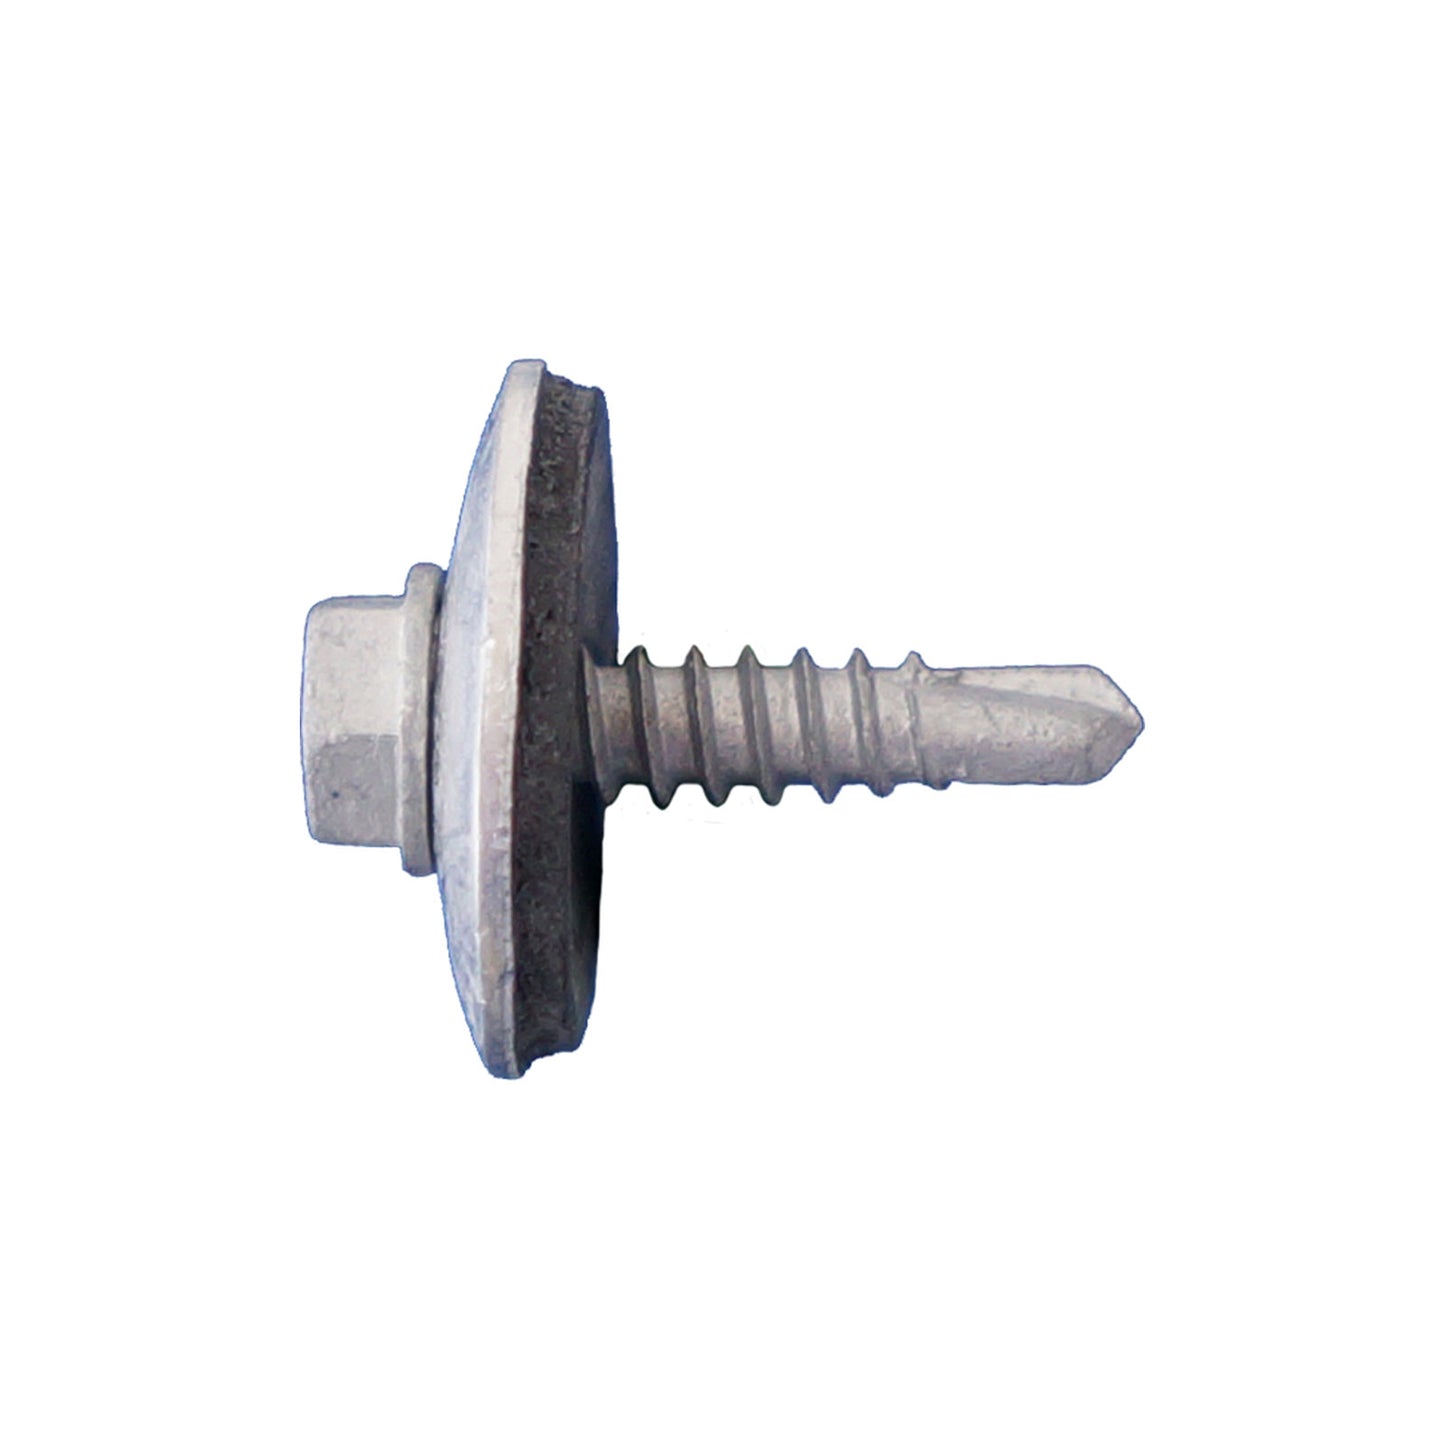 #8 x 3/4" Self-Drilling Sheet Metal Screw w/Washer, Hex Head - Dagger-Guard Coating, Pkg 3000